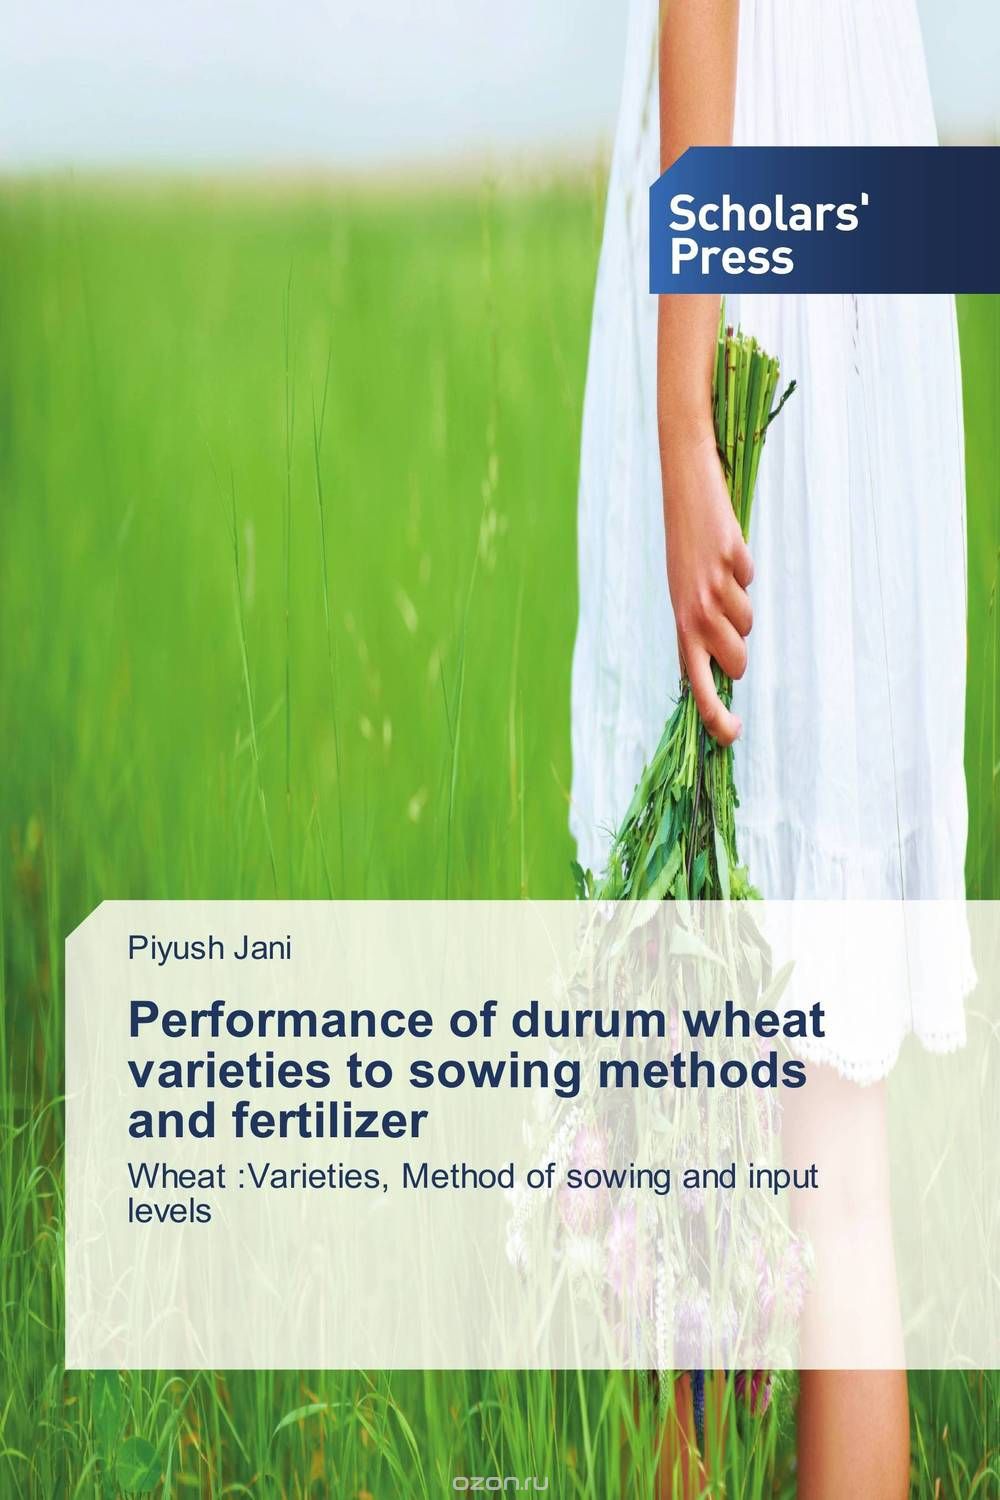 Скачать книгу "Performance of durum wheat varieties to sowing methods and fertilizer"